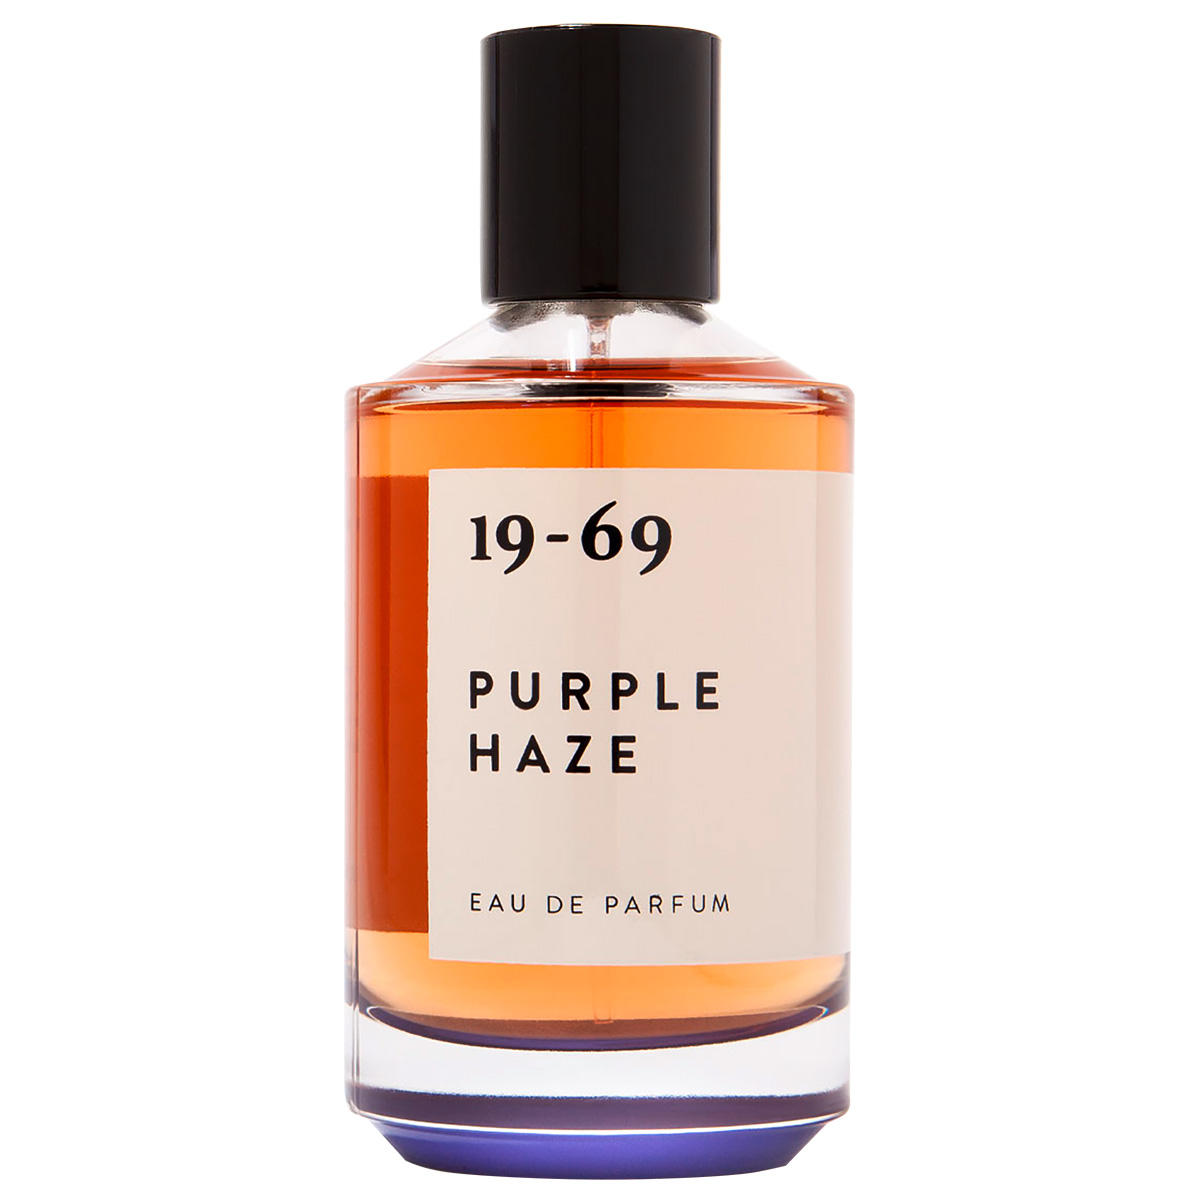 19-69 purple haze eau de parfum 100 ml